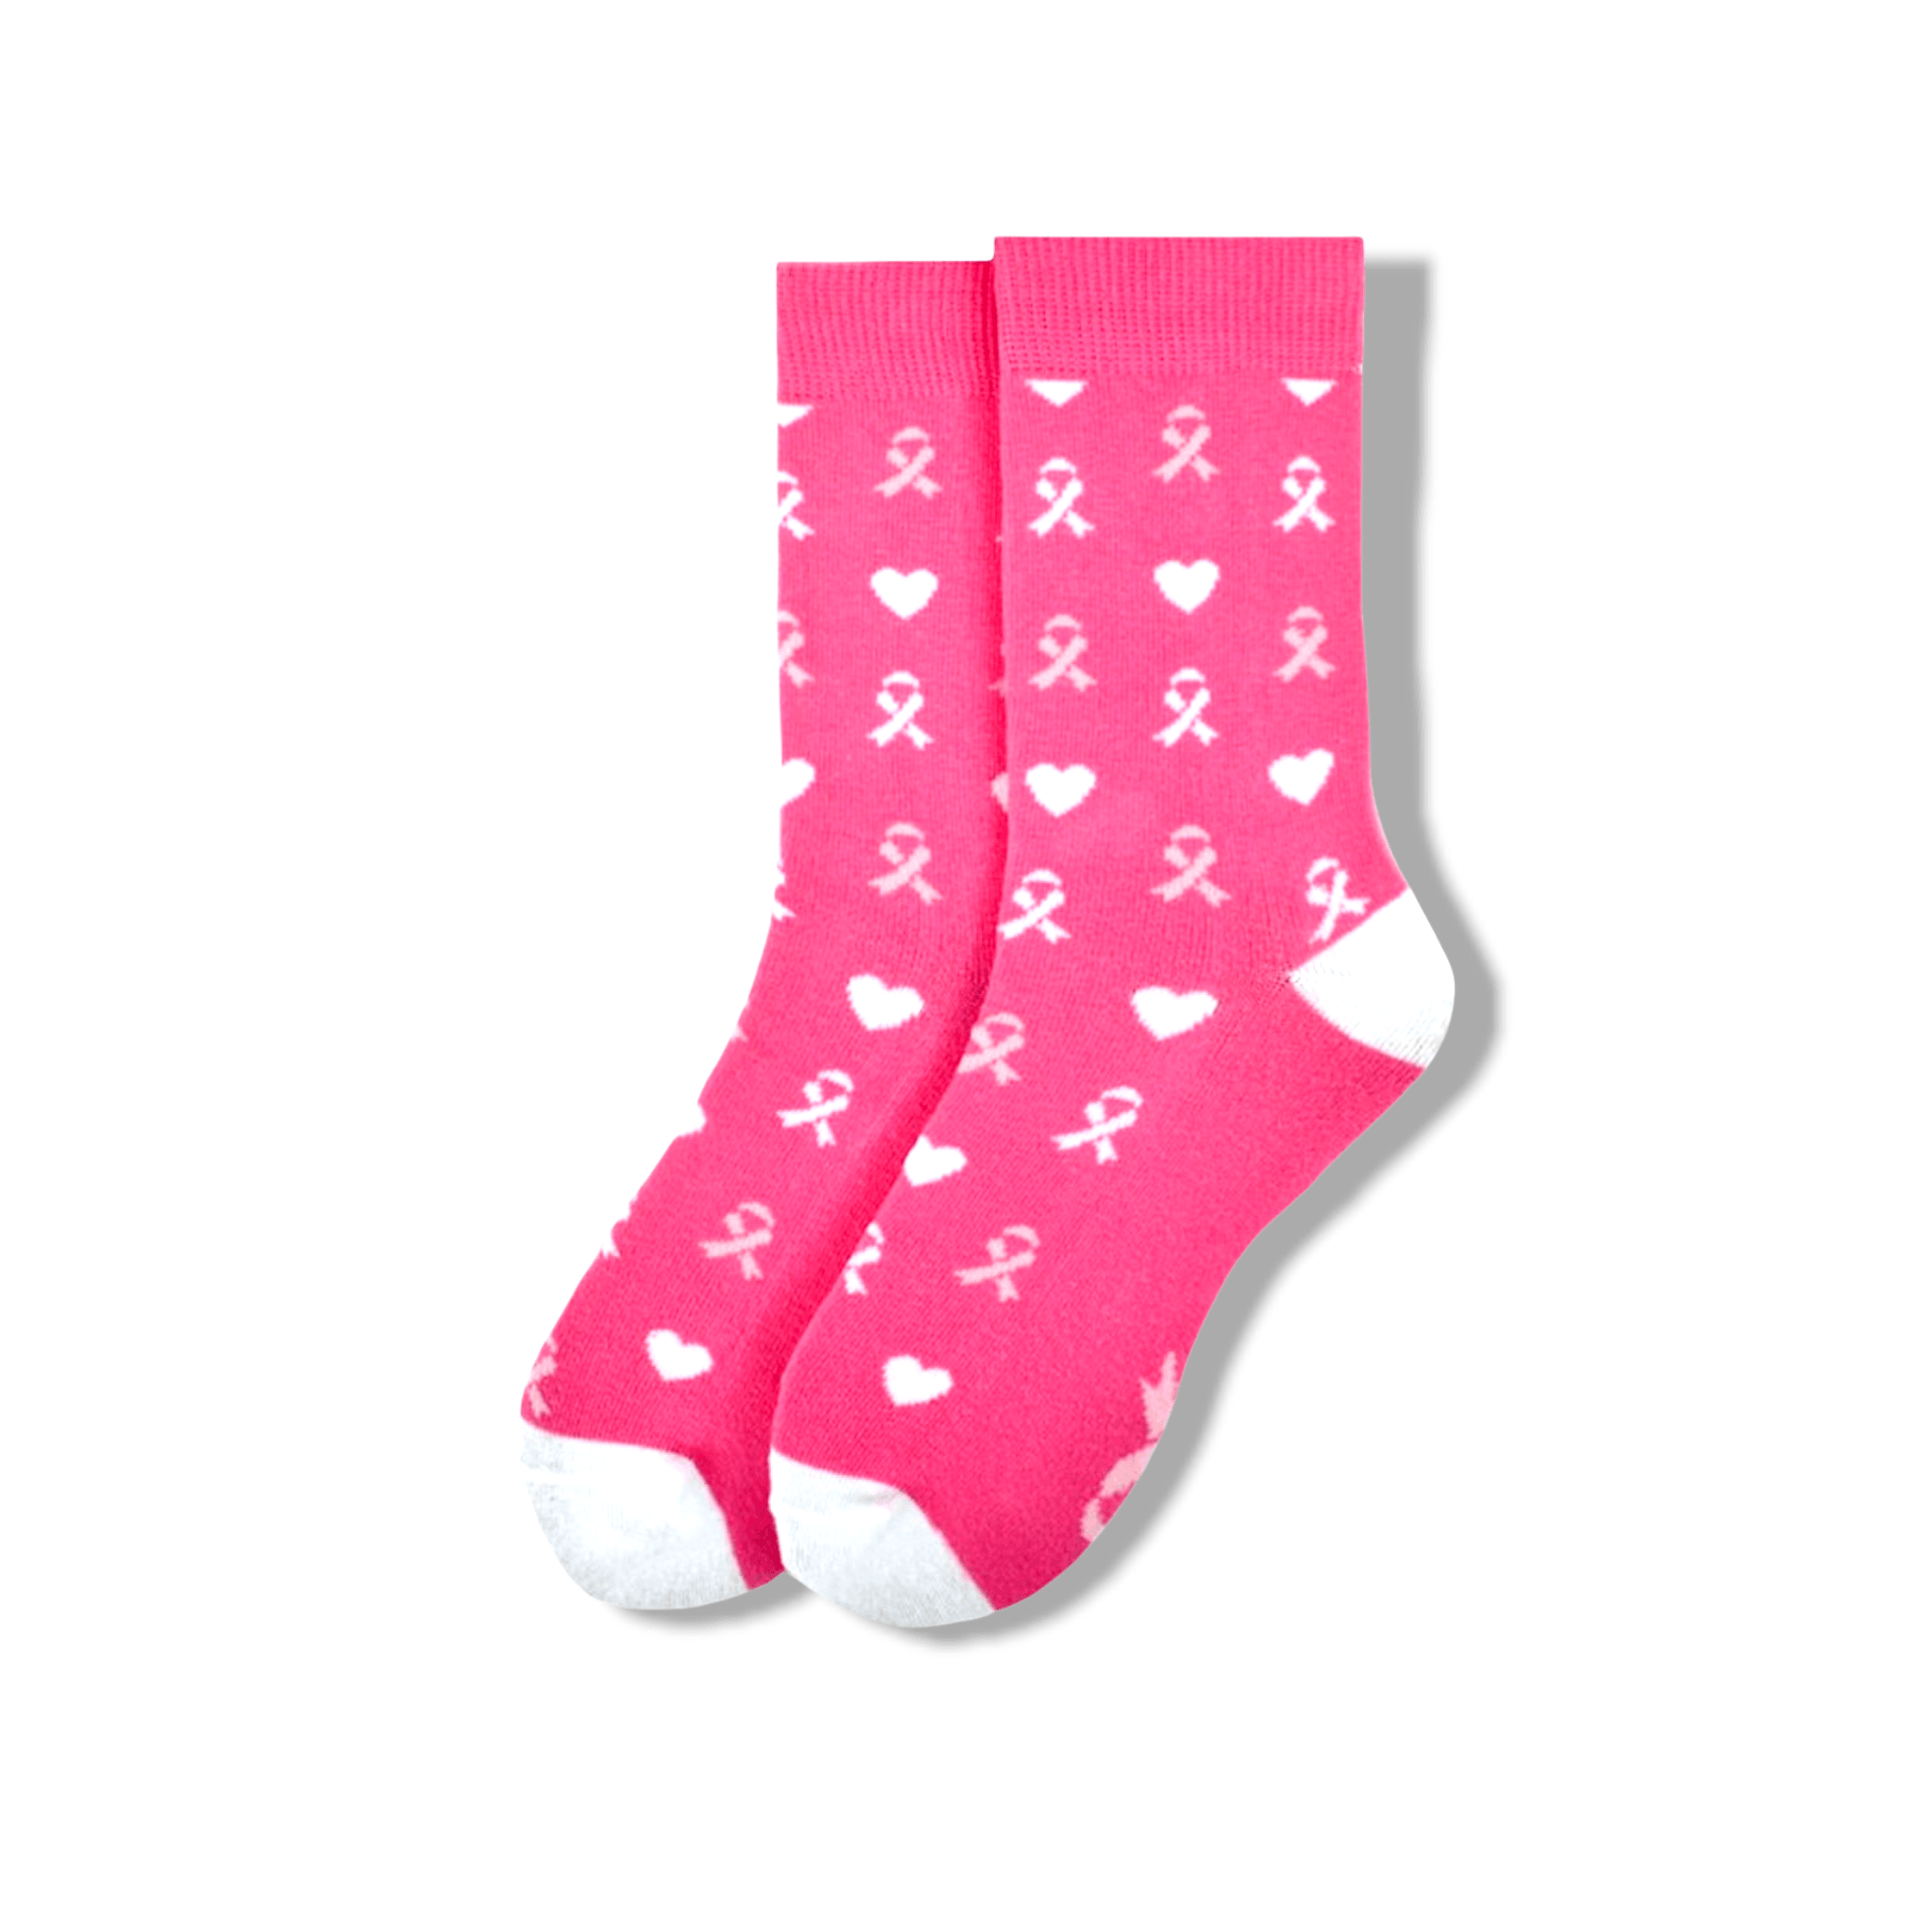 Breast Cancer Awareness Novelty Socks - POLICY Handbags - policyhandbags.com